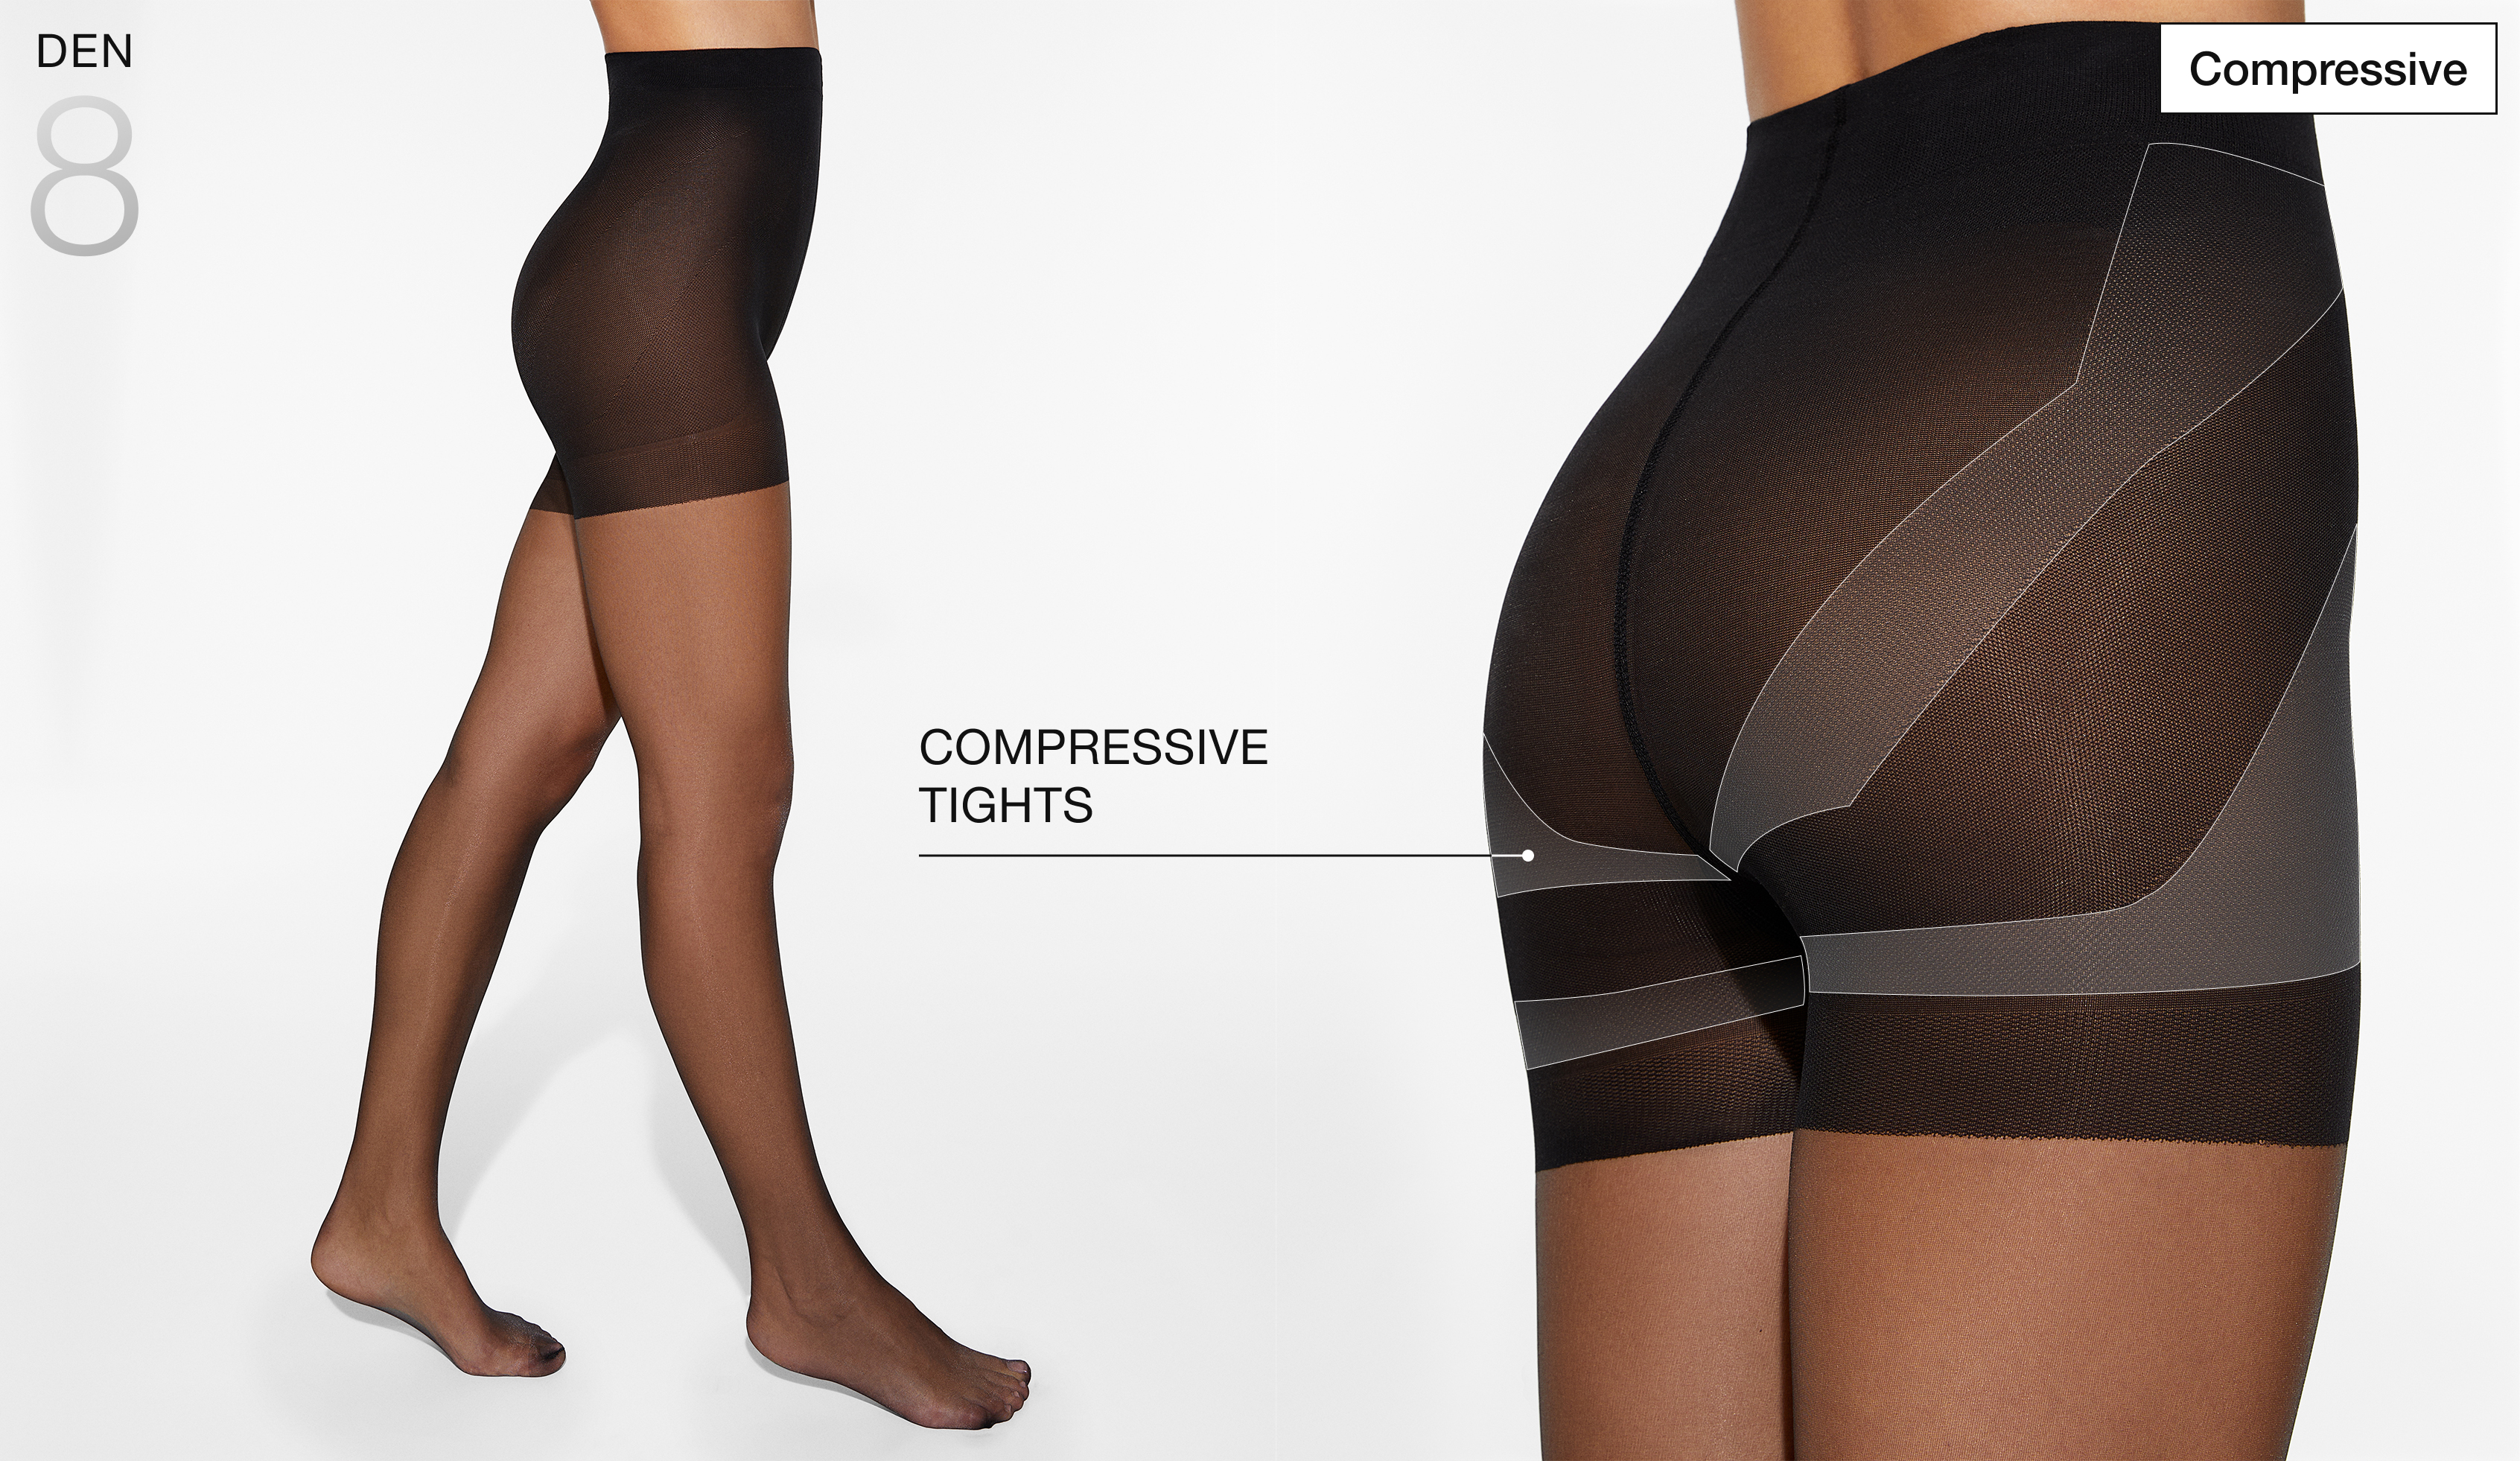 Compressive 80 denier opaque tights